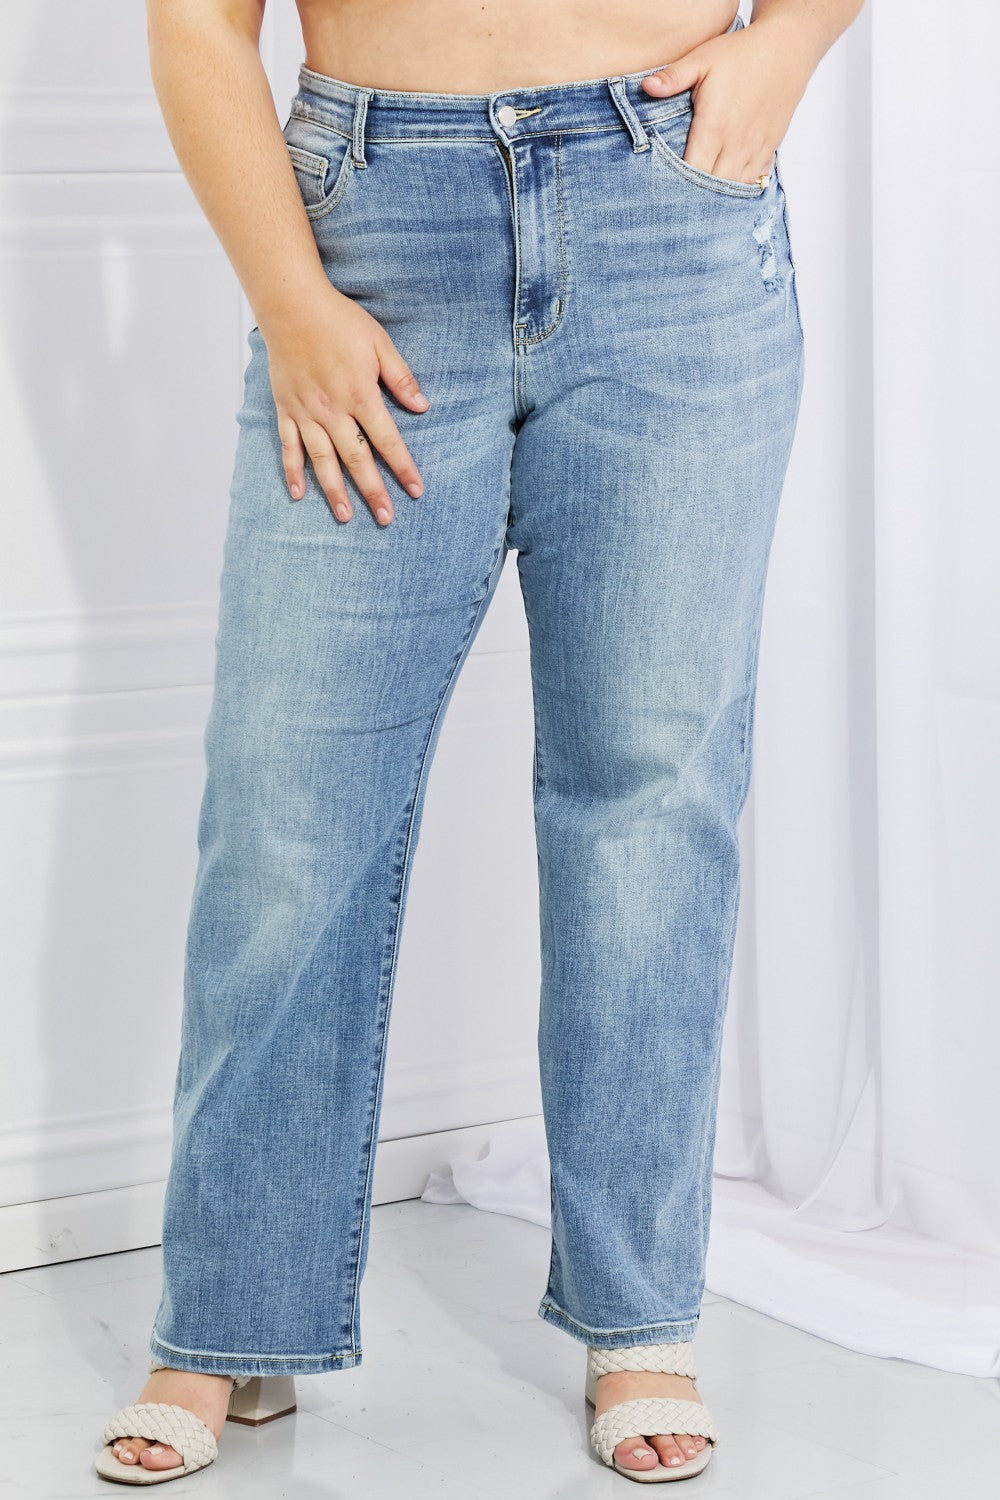 Plus Size, Judy Blue Full Size Rachel Jeans Style 82407